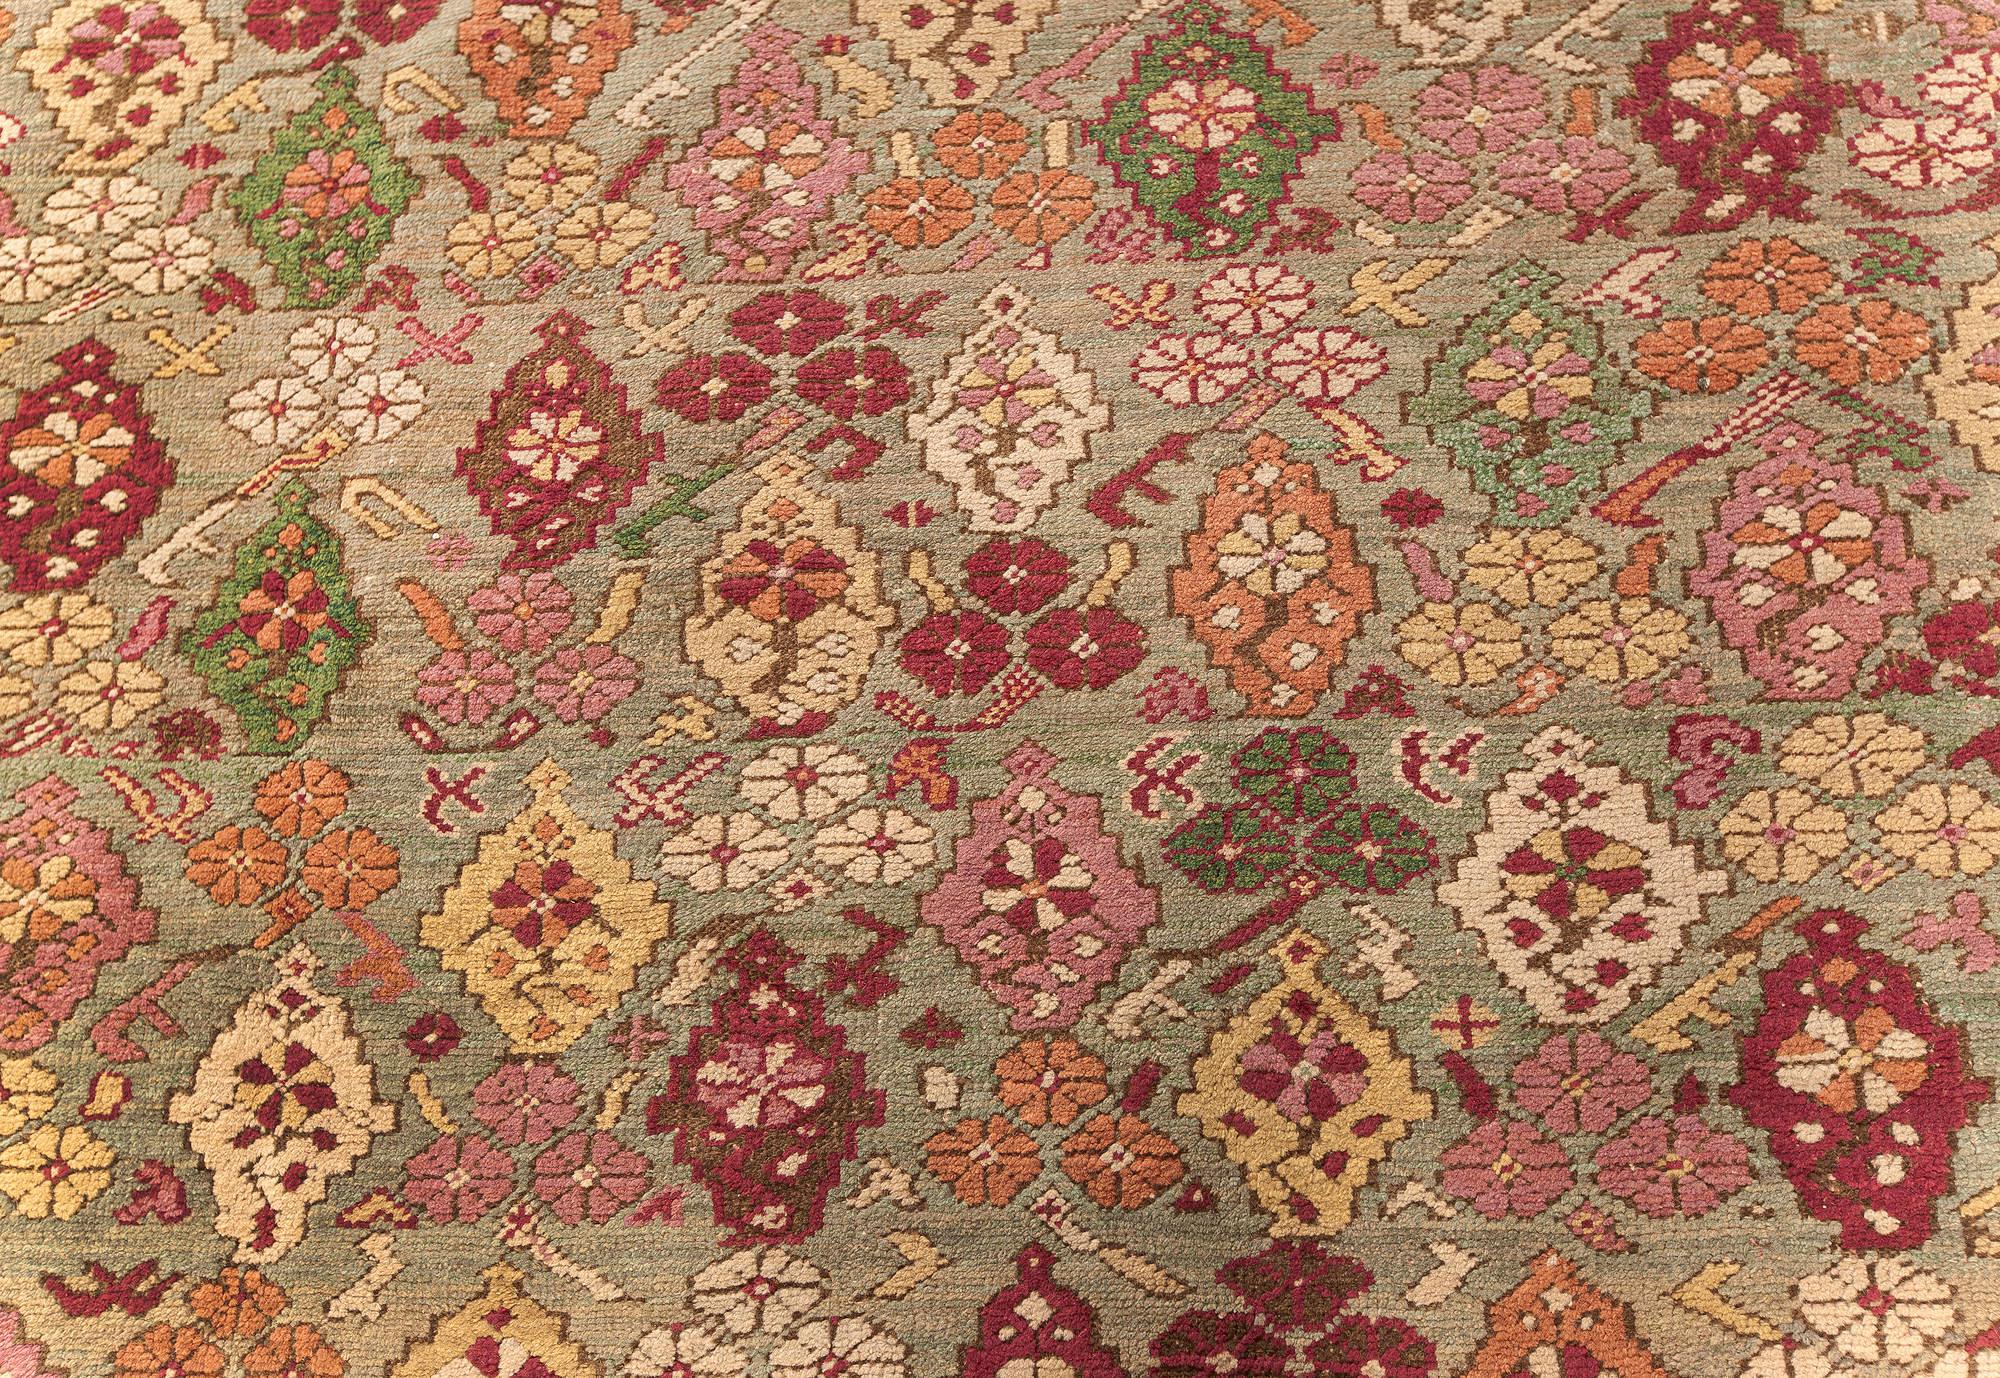 Antique Turkish Ghiordes beige, green, orange, pink, red rug 'size adjusted'
Size: 10'5